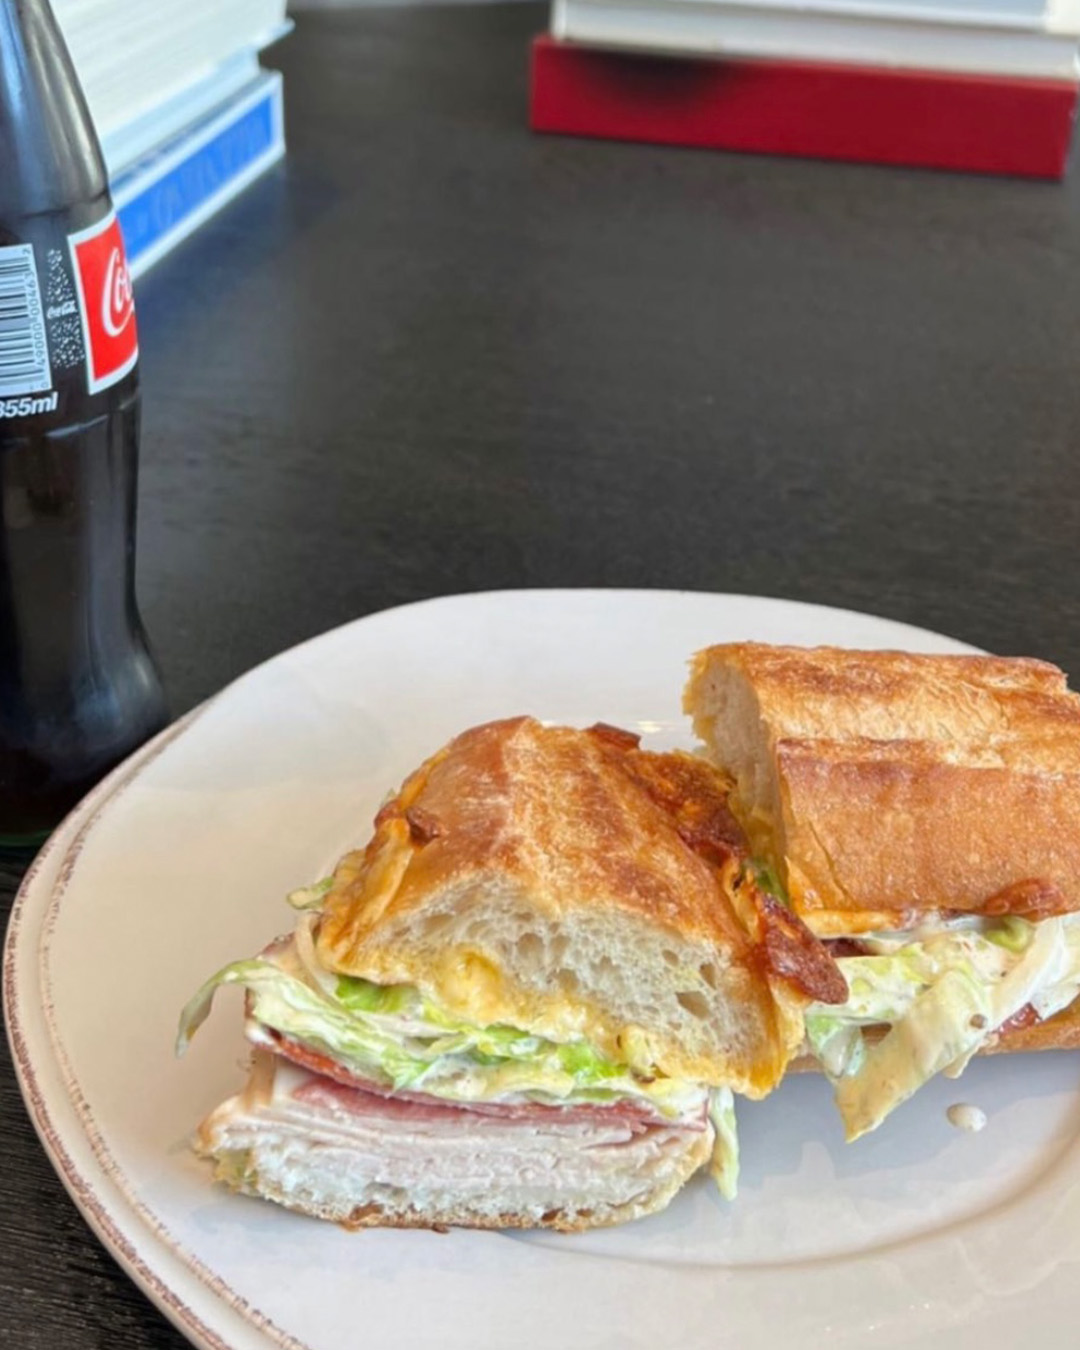 Kylie’s Crispy Sandwich